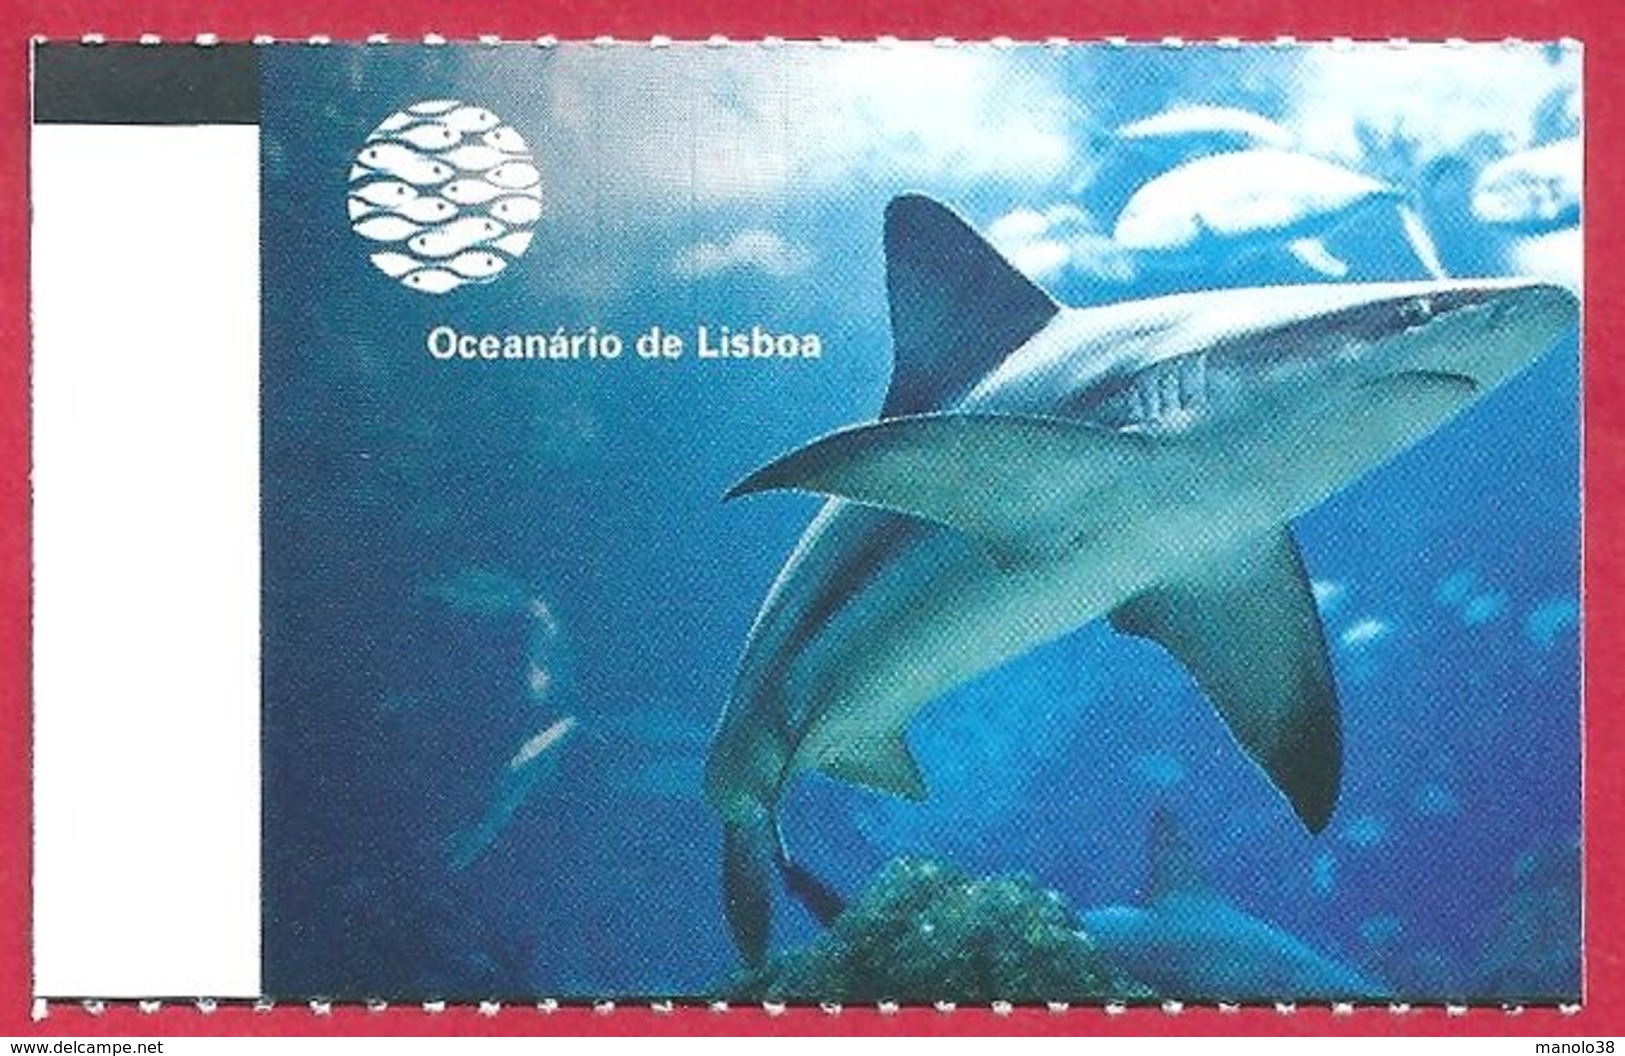 Ticket De L'aquarium De Lisbonne. Portugal. Visuel: Un Requin. 2019. - Tickets D'entrée